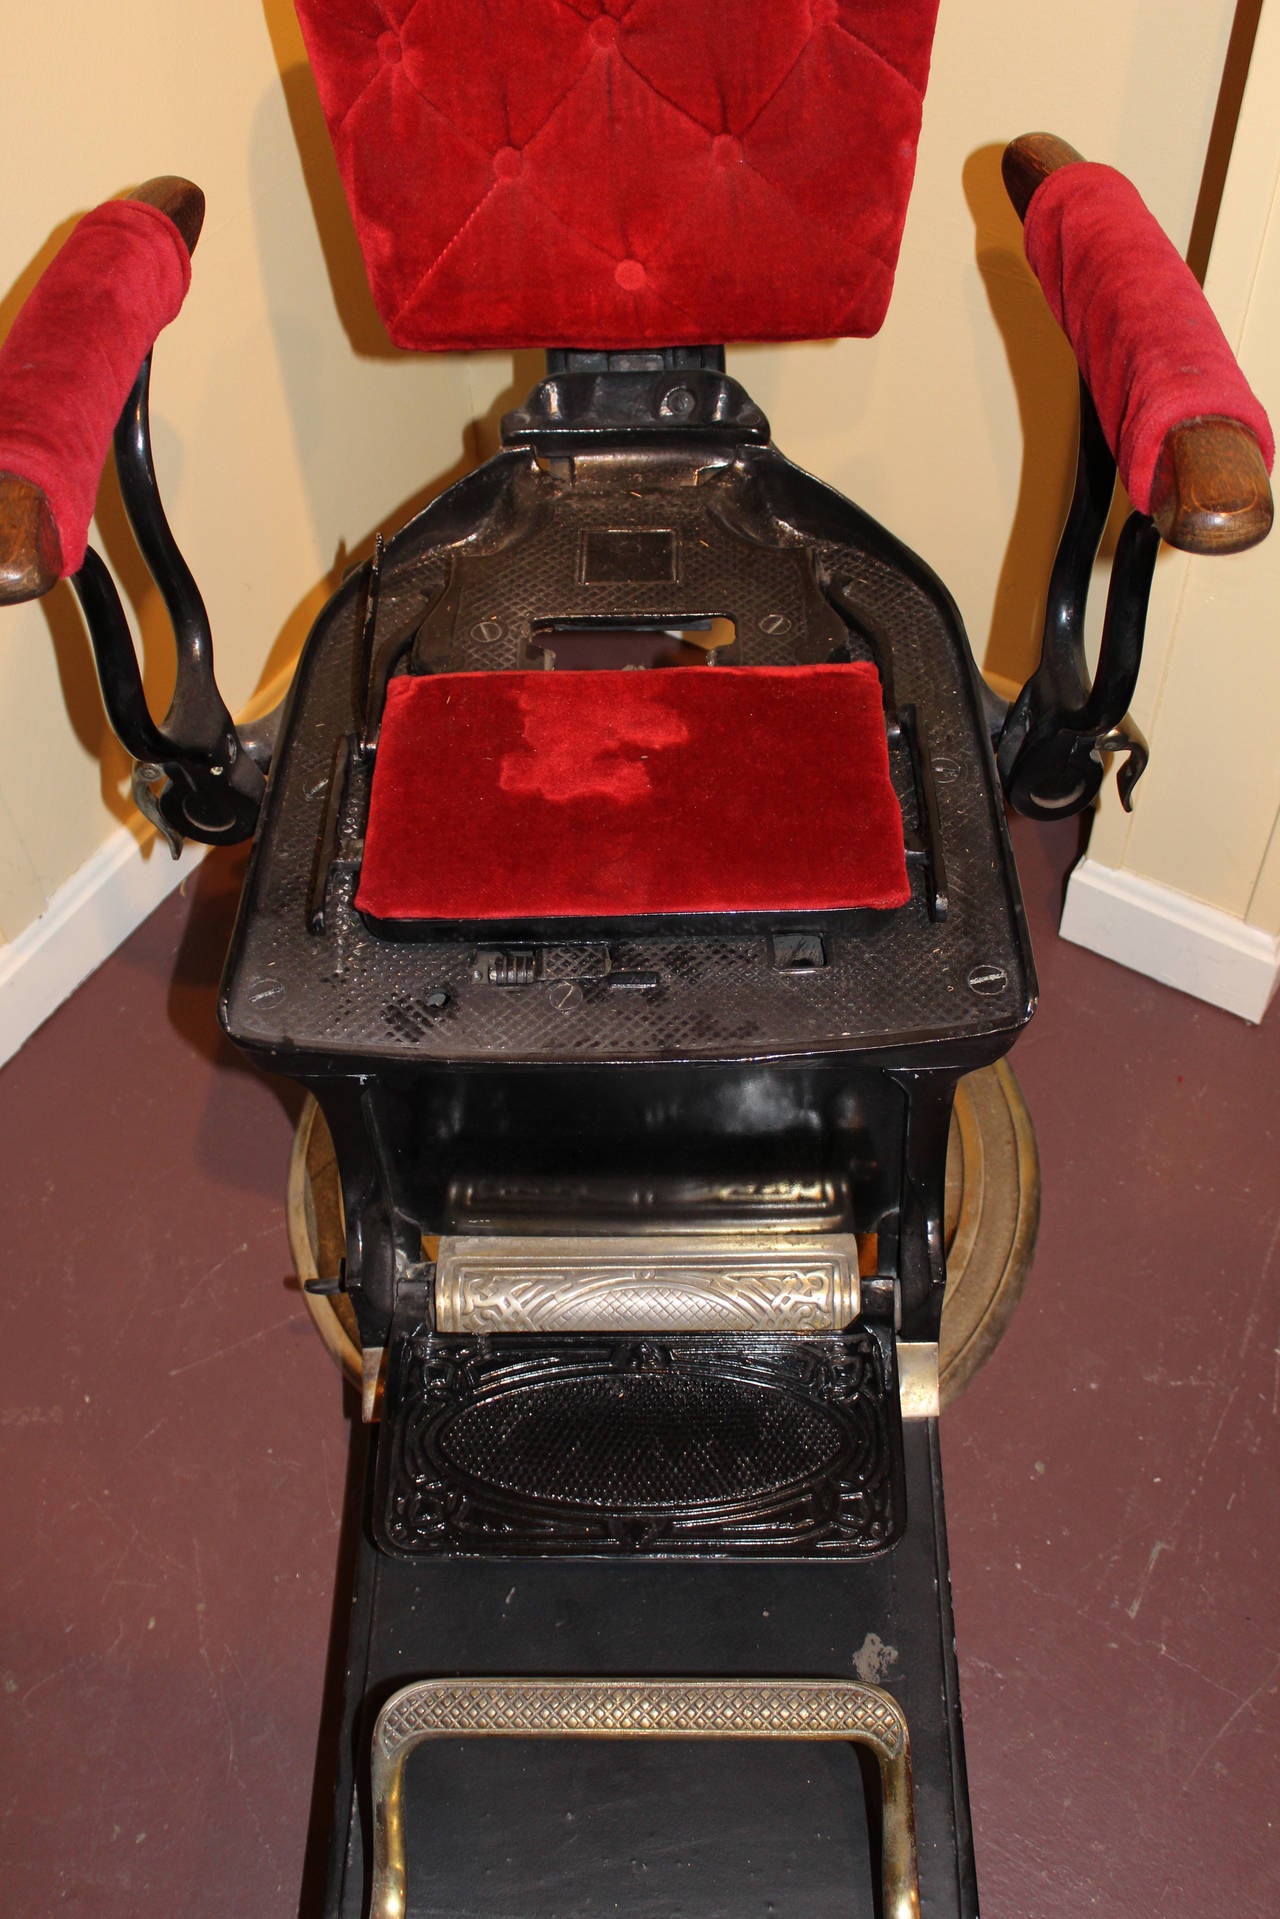 American Ritter Imperial Columbia Dental or Dentist Chair, circa 1905-1925